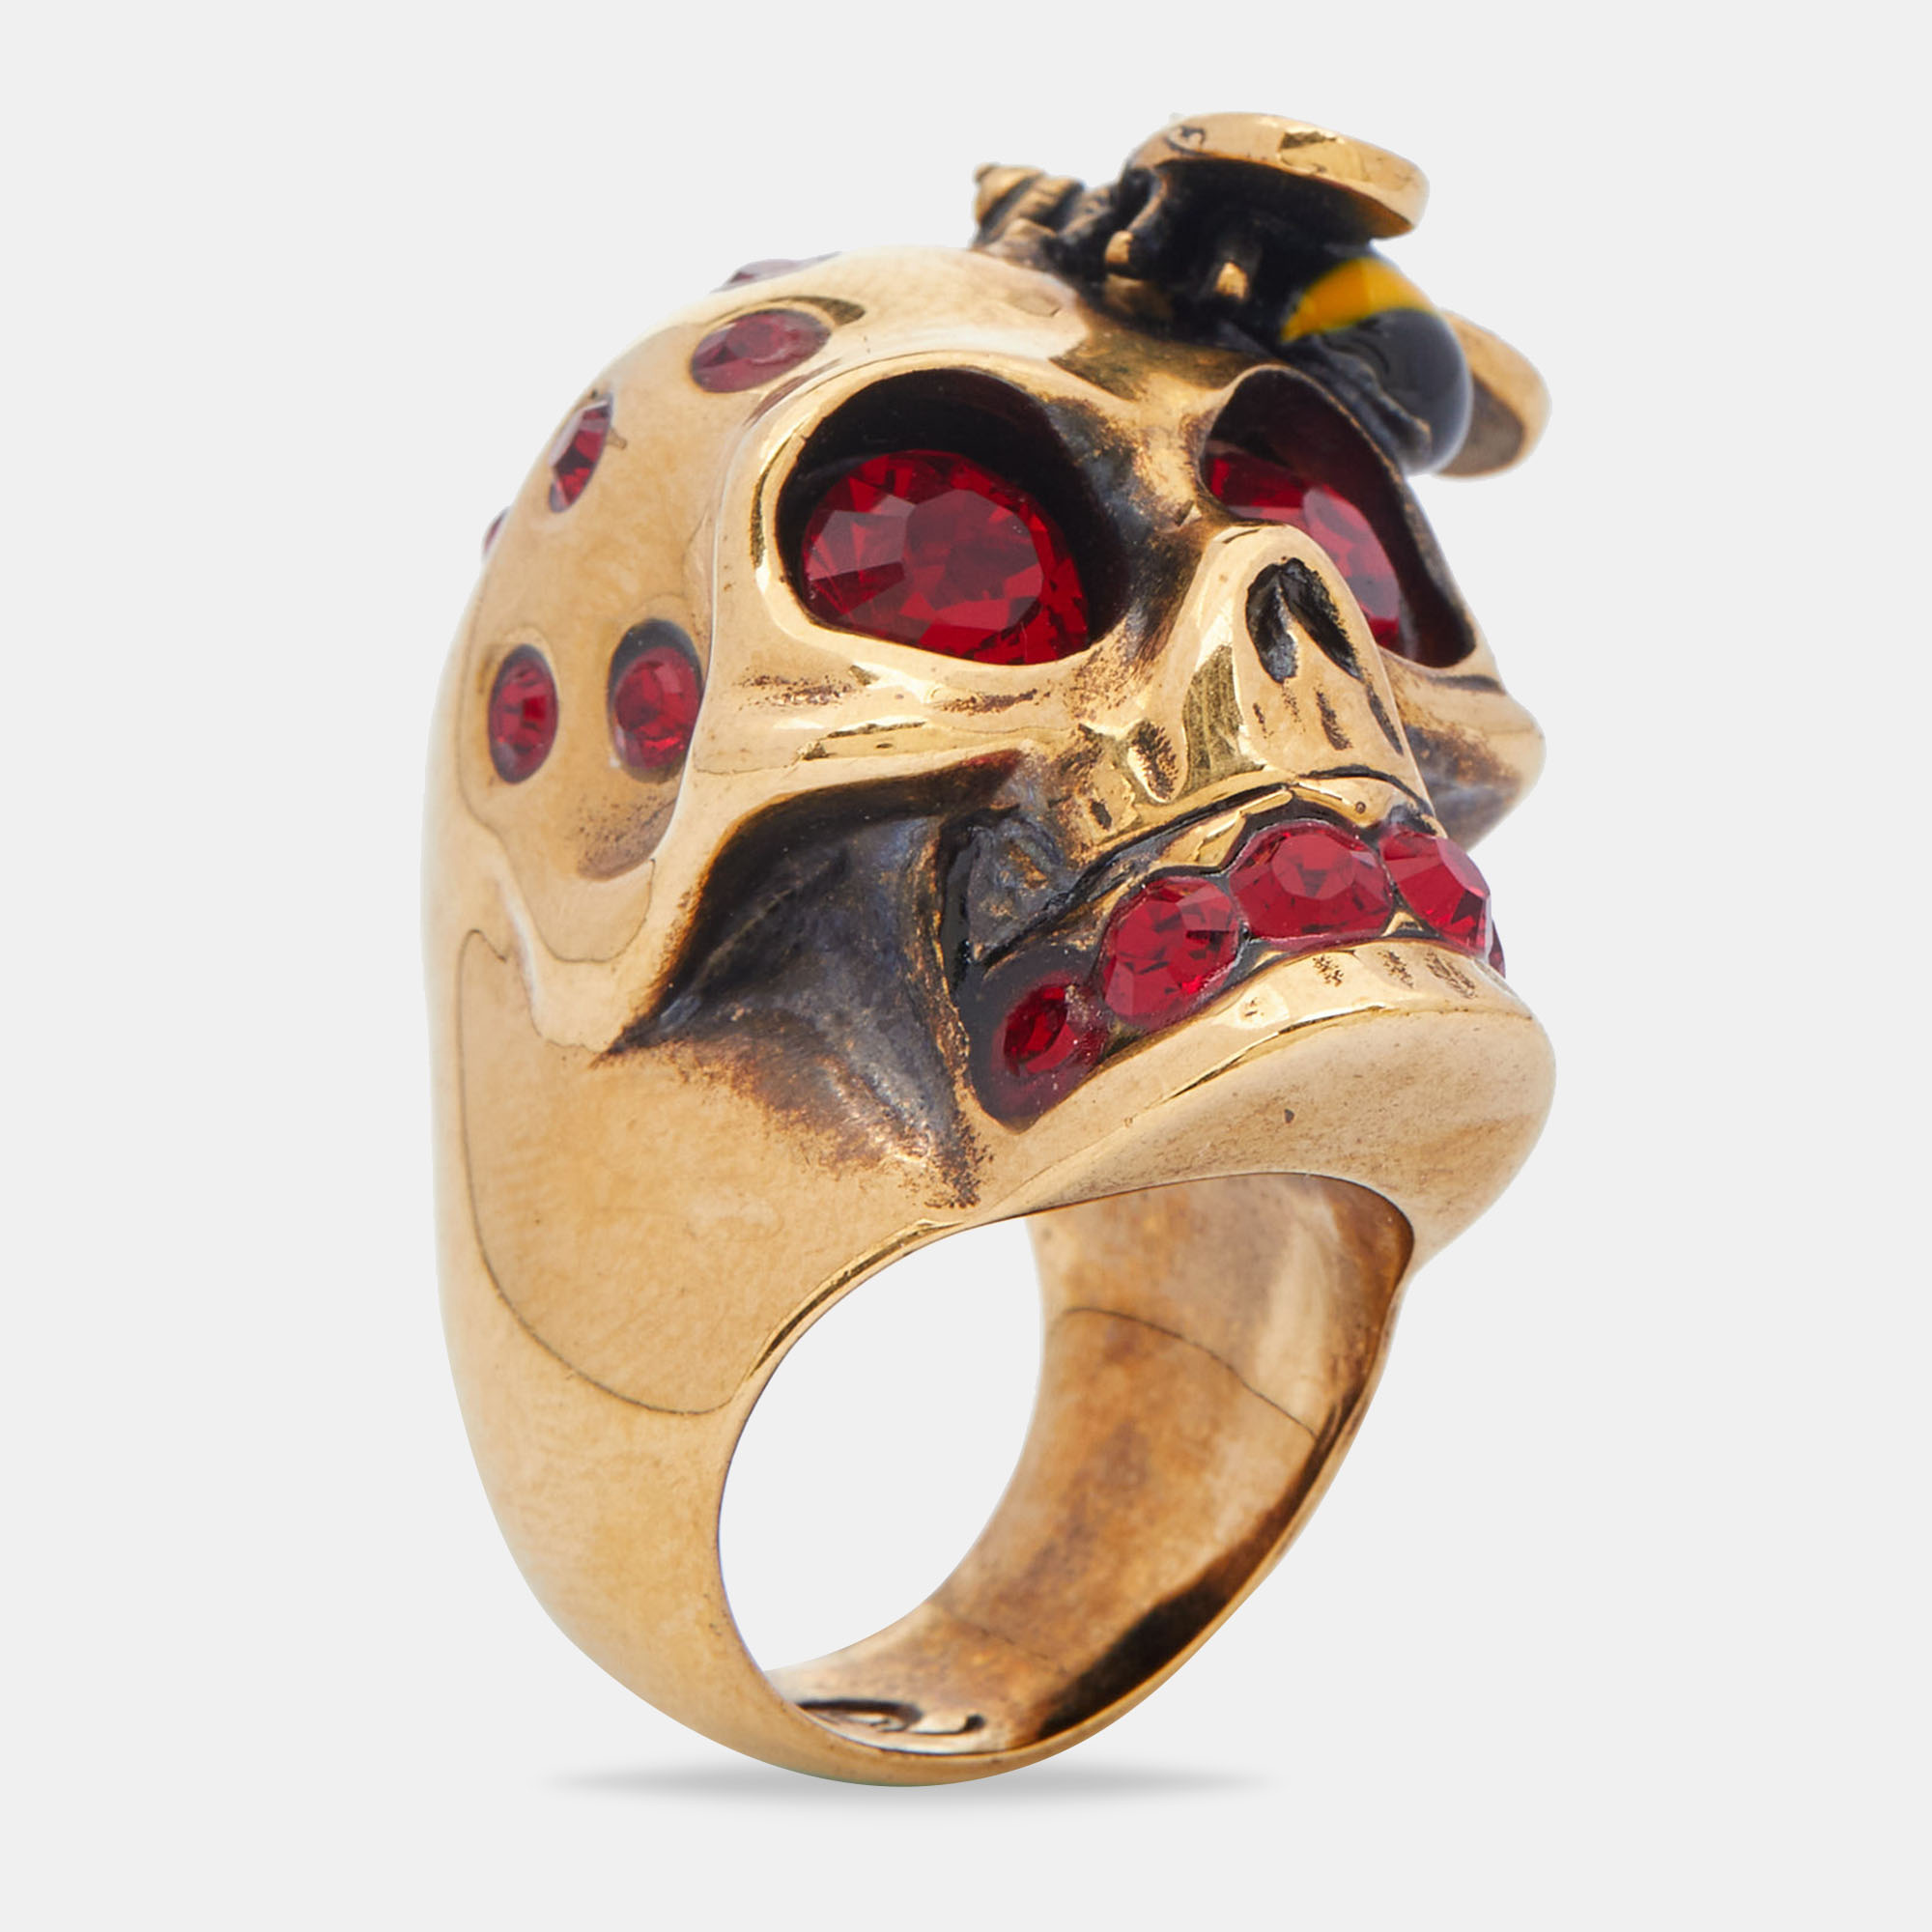 Alexander McQueen Gold Tone Bee & Skull Ring Size 51